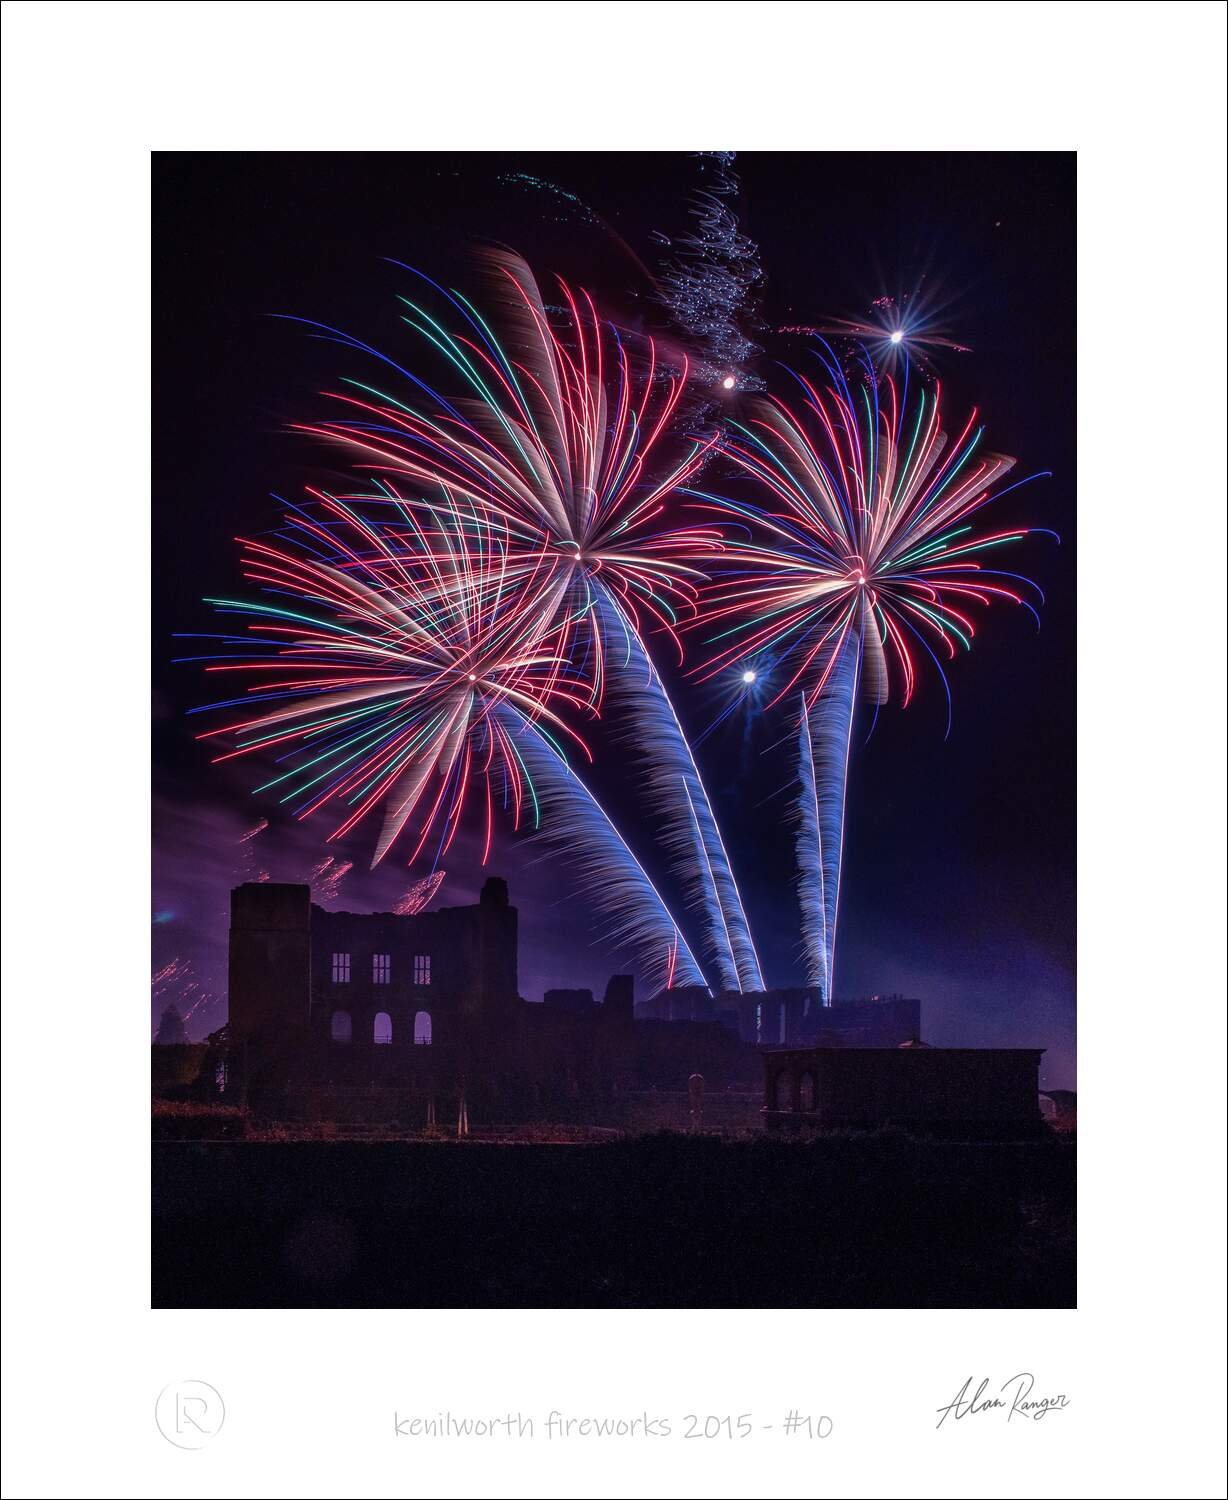 kenilworth fireworks 2015 - #10.jpg